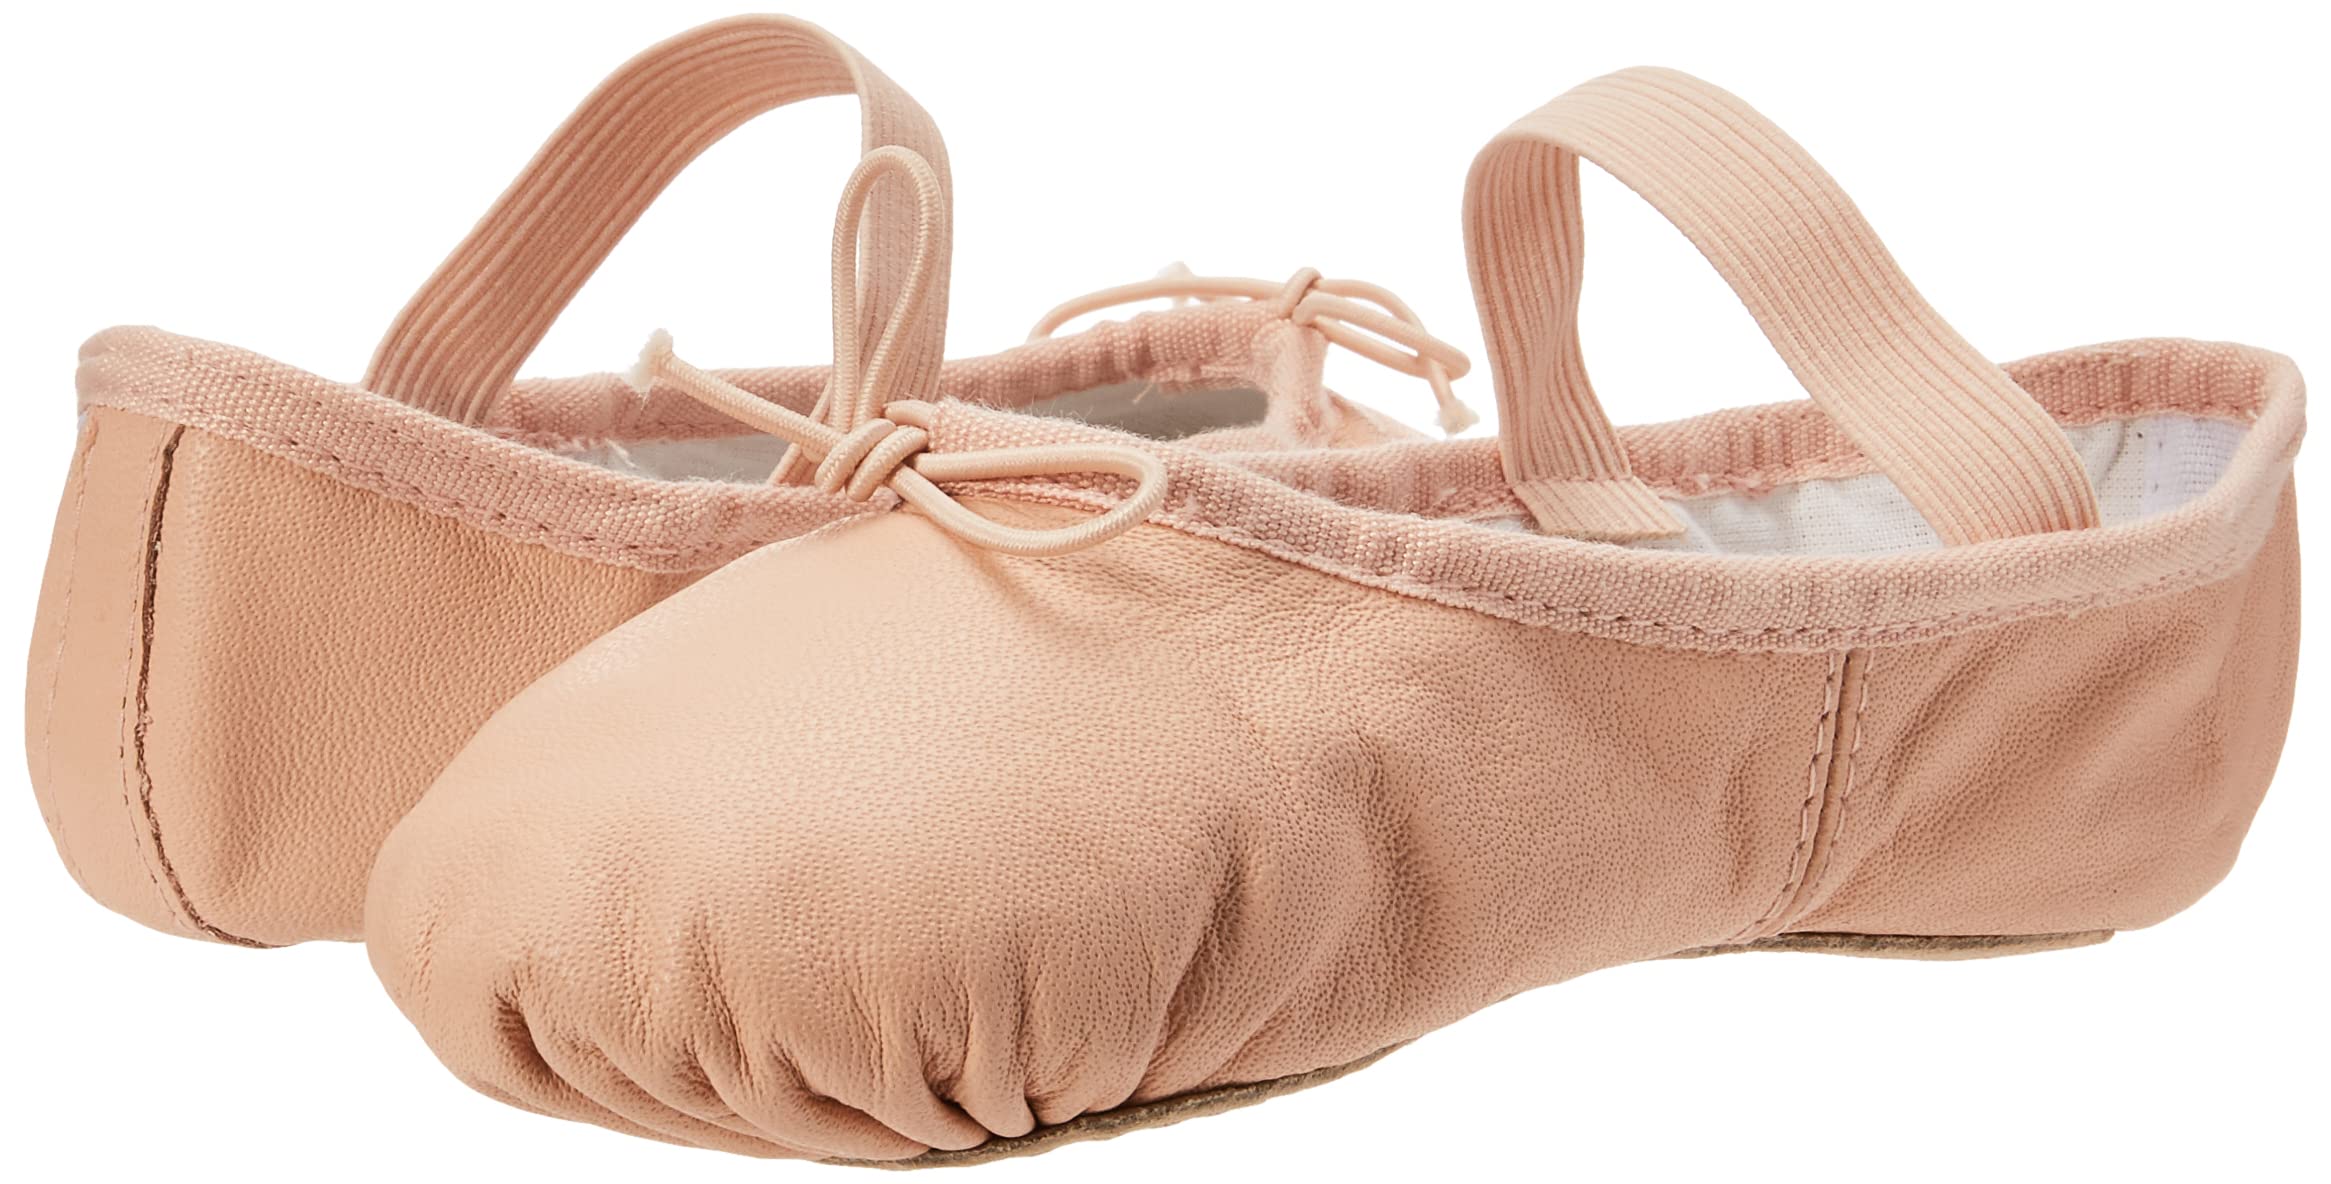 Bloch Unisex-Child Girl's Dansoft Full Sole Leather Ballet Slipper, Cotton Lining, Dance Shoe